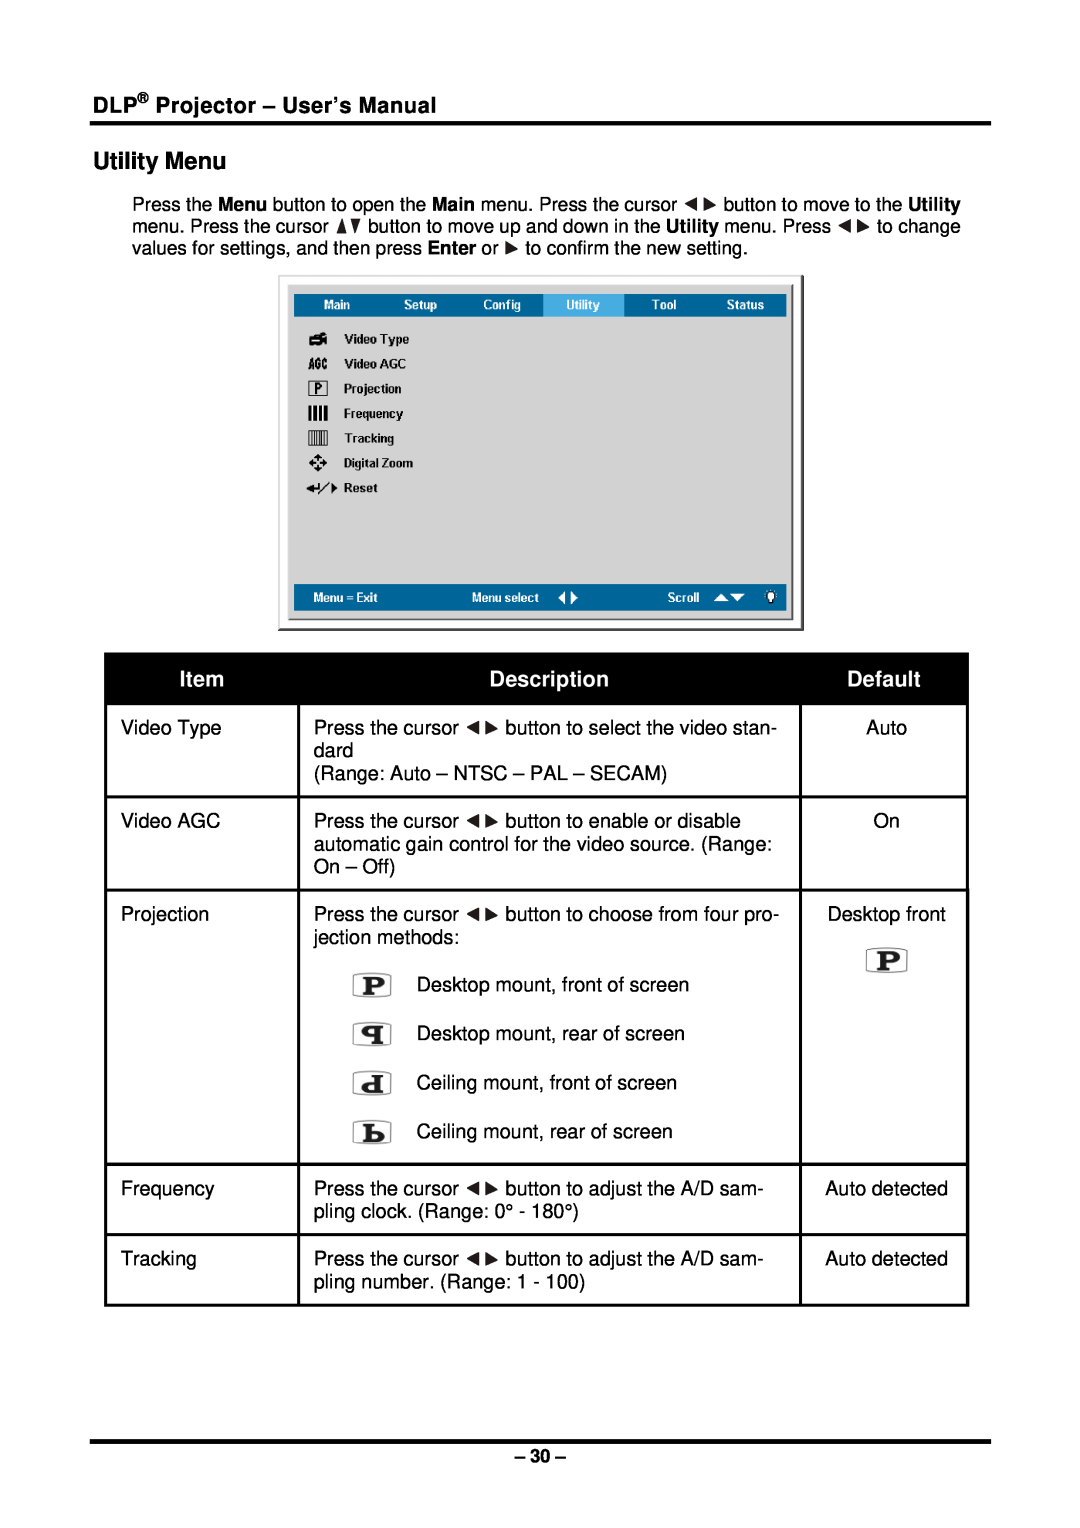 Planar PR5022 manual Utility Menu, DLP Projector - User’s Manual, Description, Default 